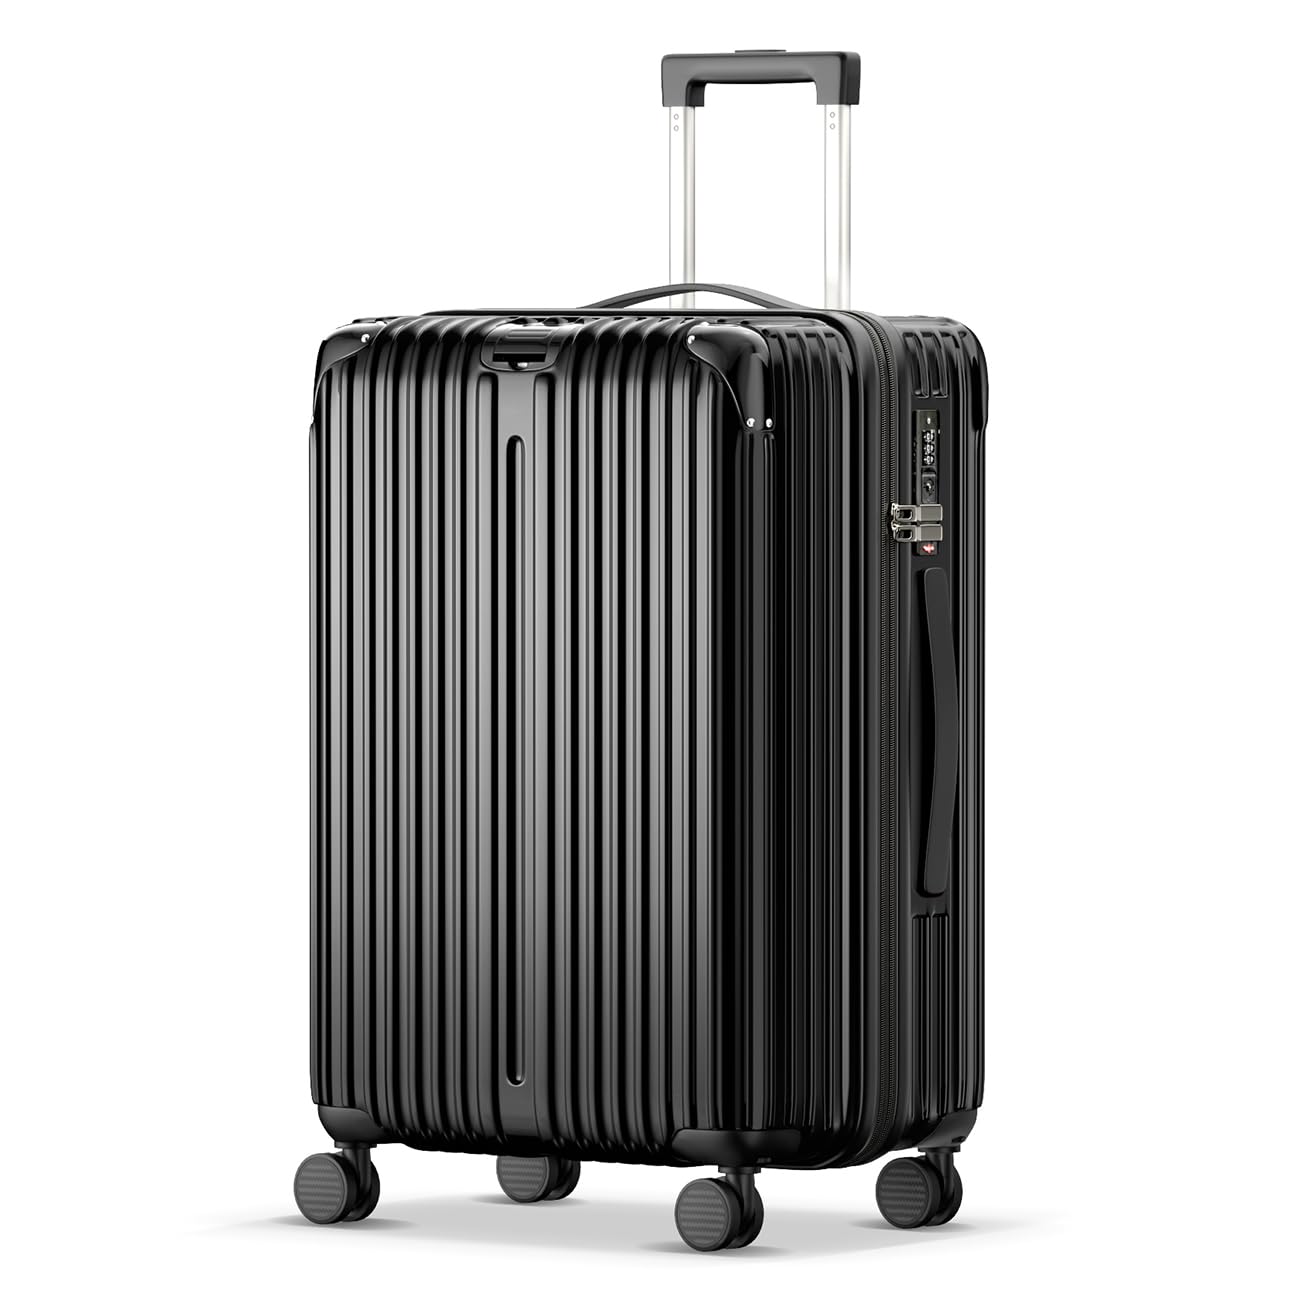 [Ebeiya] スーツケース キャリーバッグ キャリーケース ｍサイズ 拡張機能付 超軽量 大型 静音 ダブルキャスター 取り外す可能 防盗ファスナー 耐衝撃 TSAローク搭載 旅行 ビジネス 出張